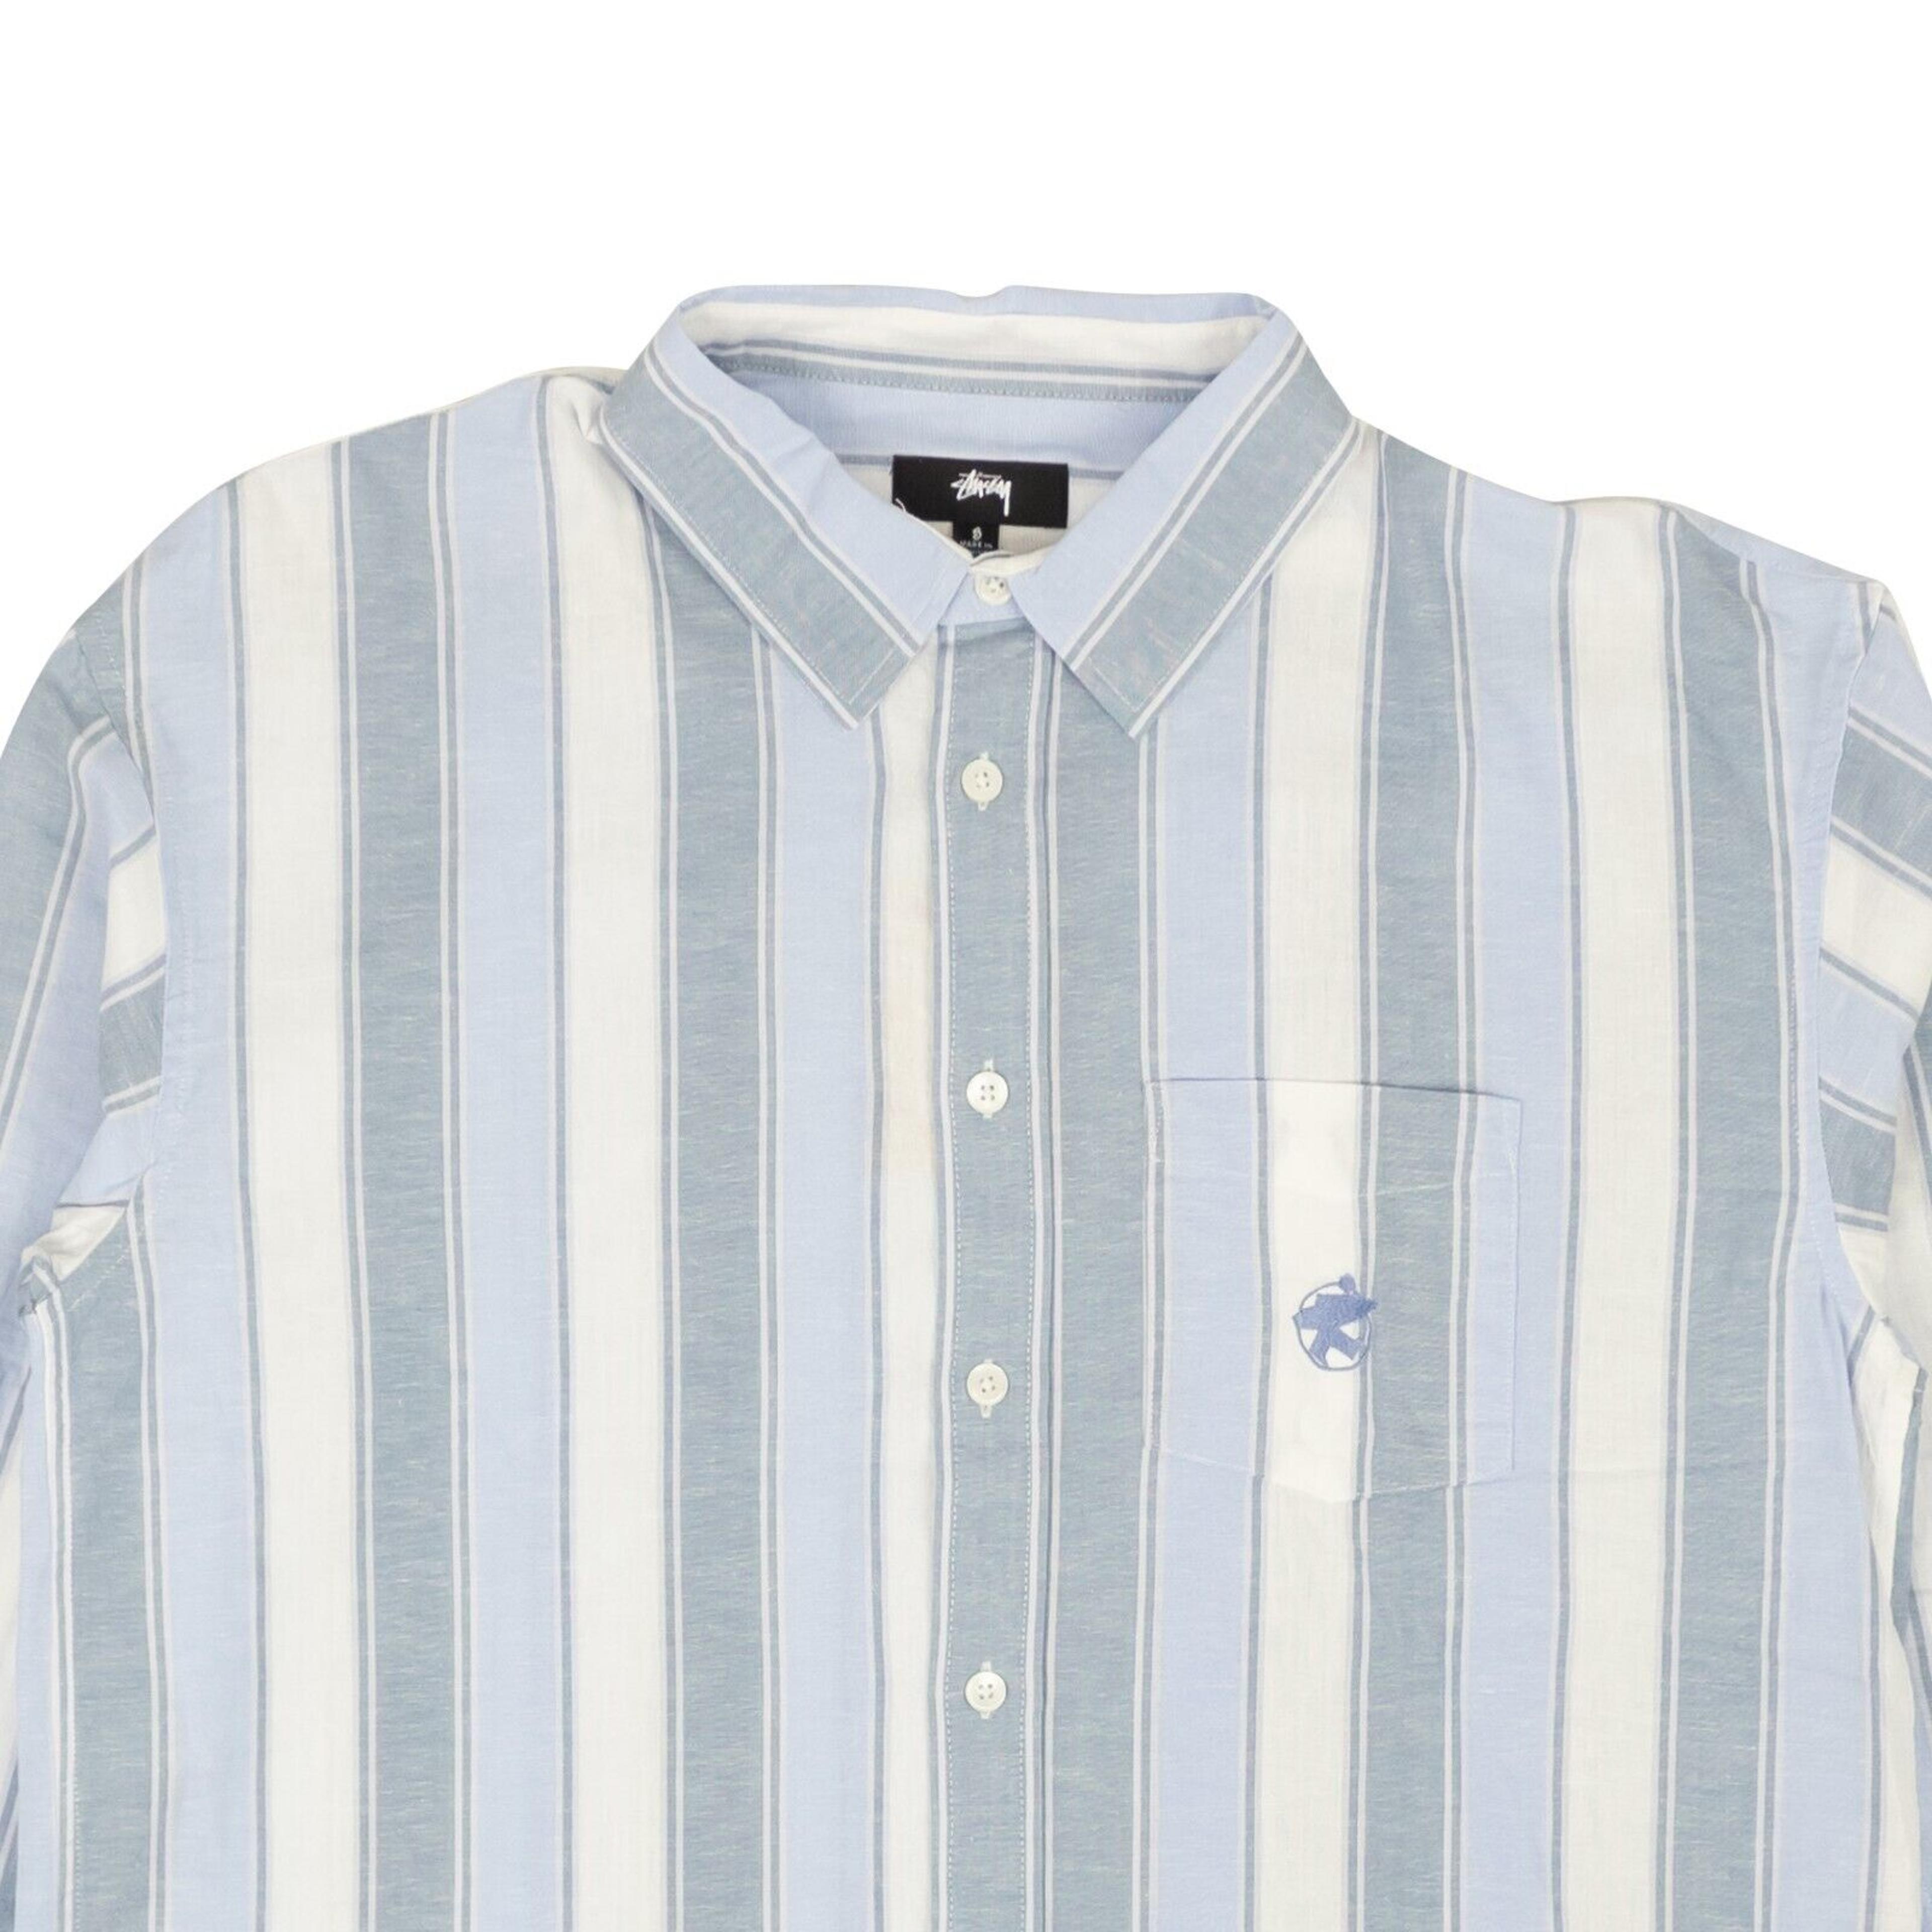 Alternate View 1 of Blue Cotton Wide Stripe Button Down Shirt